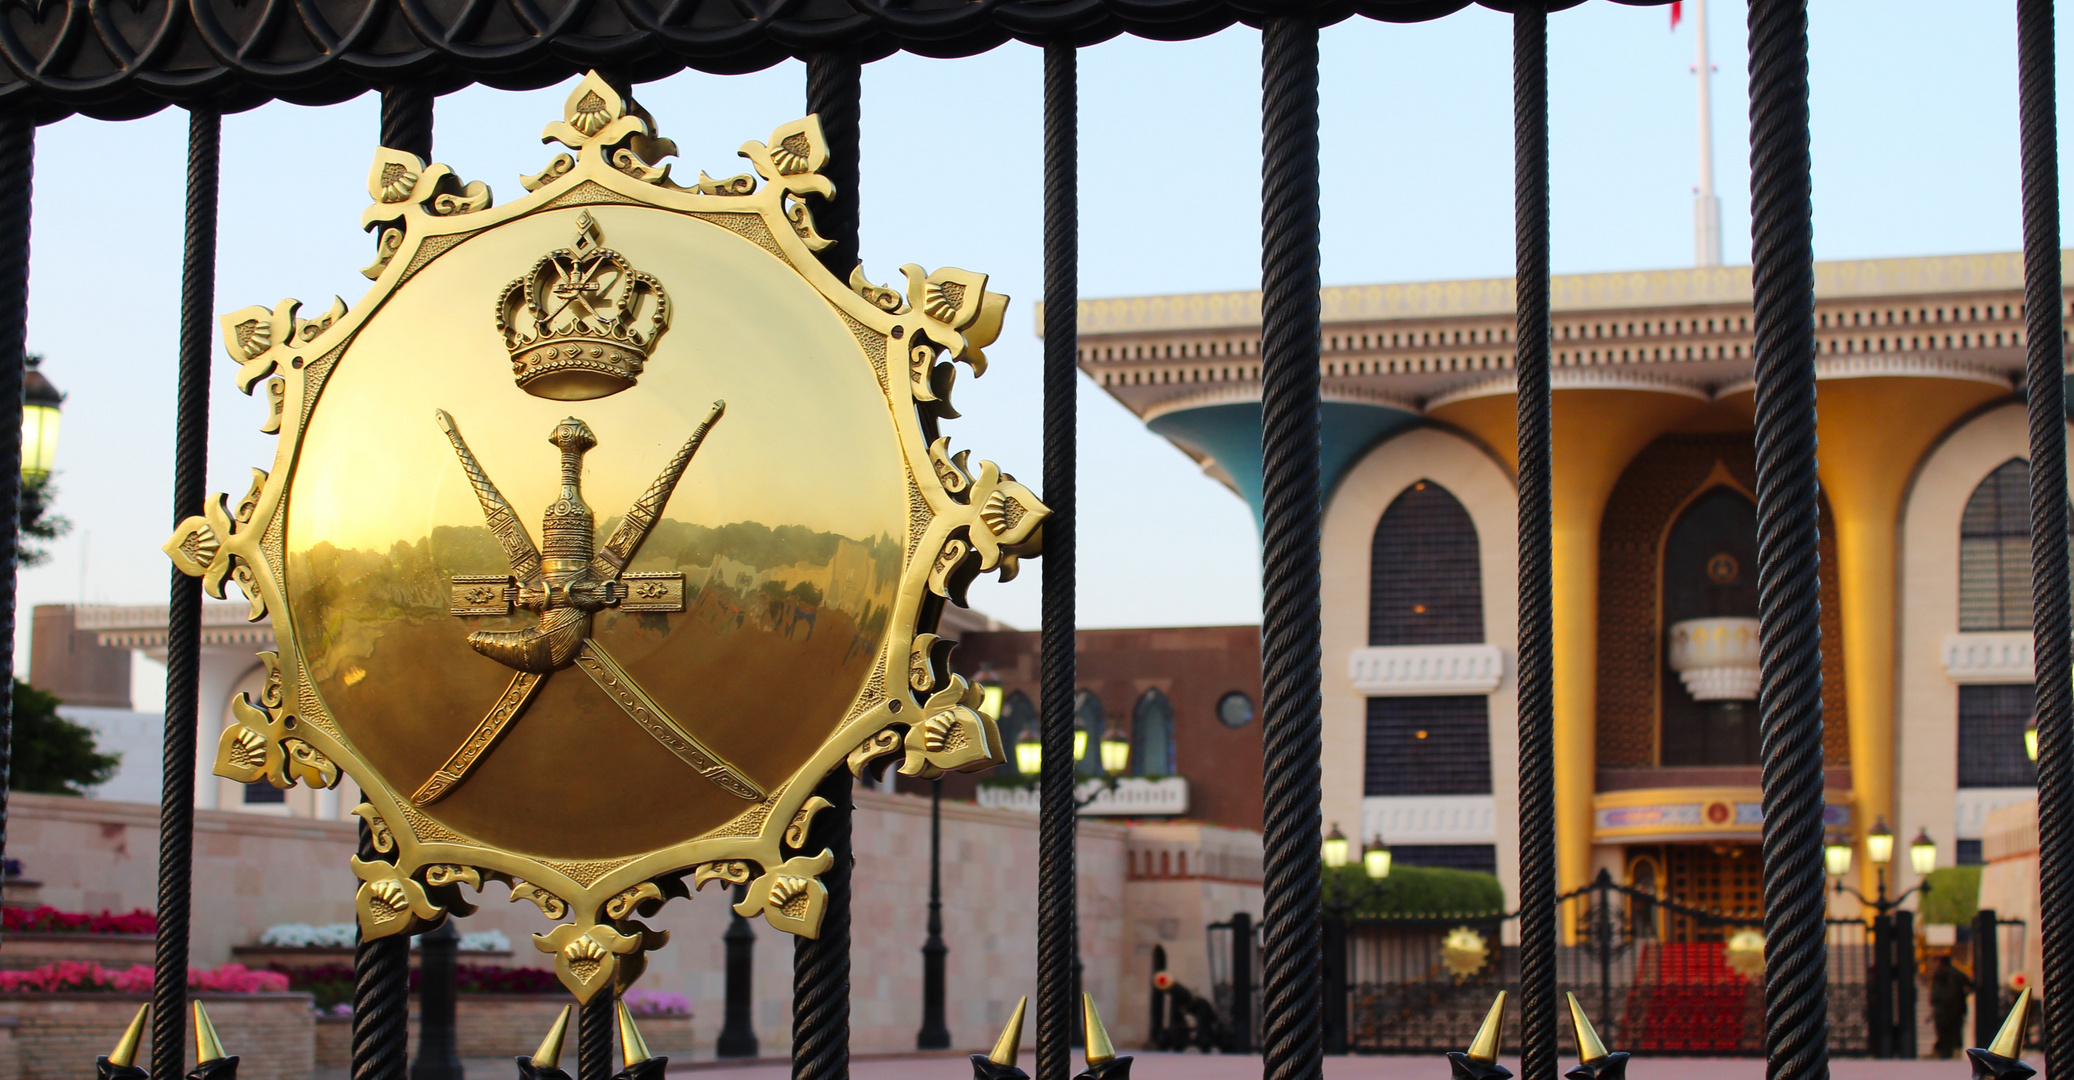 Sultan's Palace, Muscat, Oman